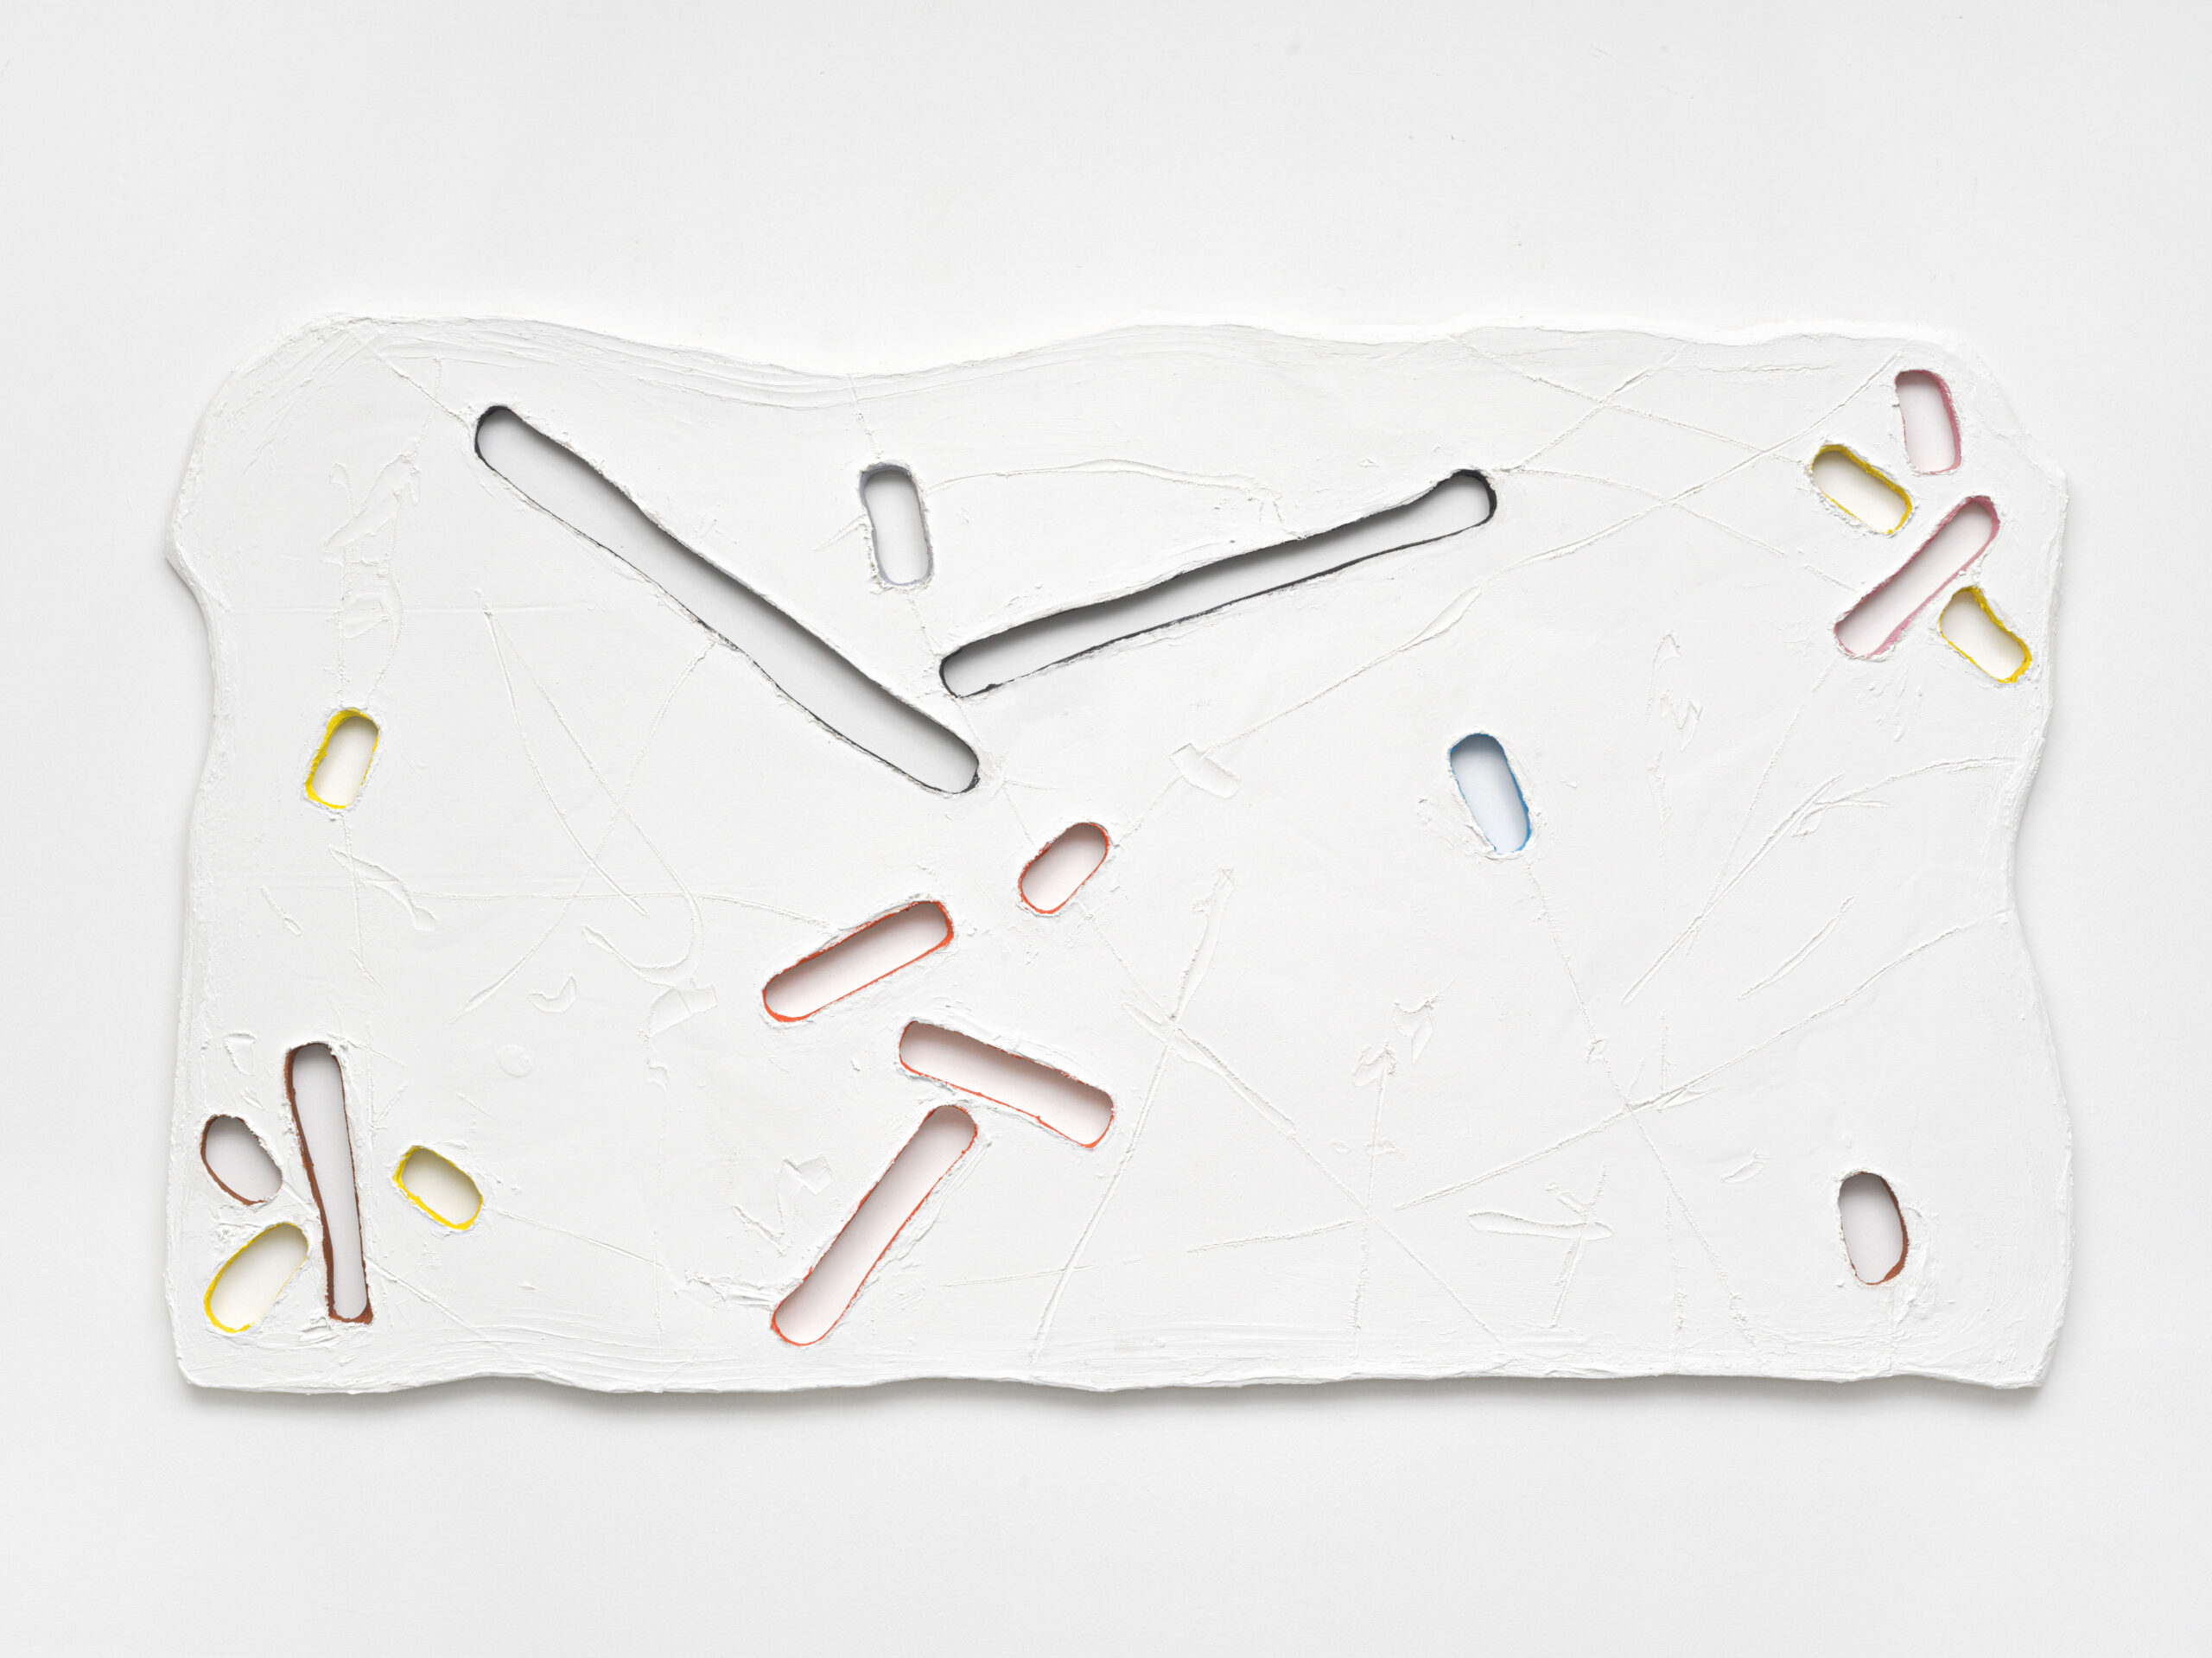 Untitled, 2022, spatula, acrylic, ink, cotton on wood, 125,0 x 220,0 x 2,2 cm / 49.2 x 86.6 x 0.9 in.